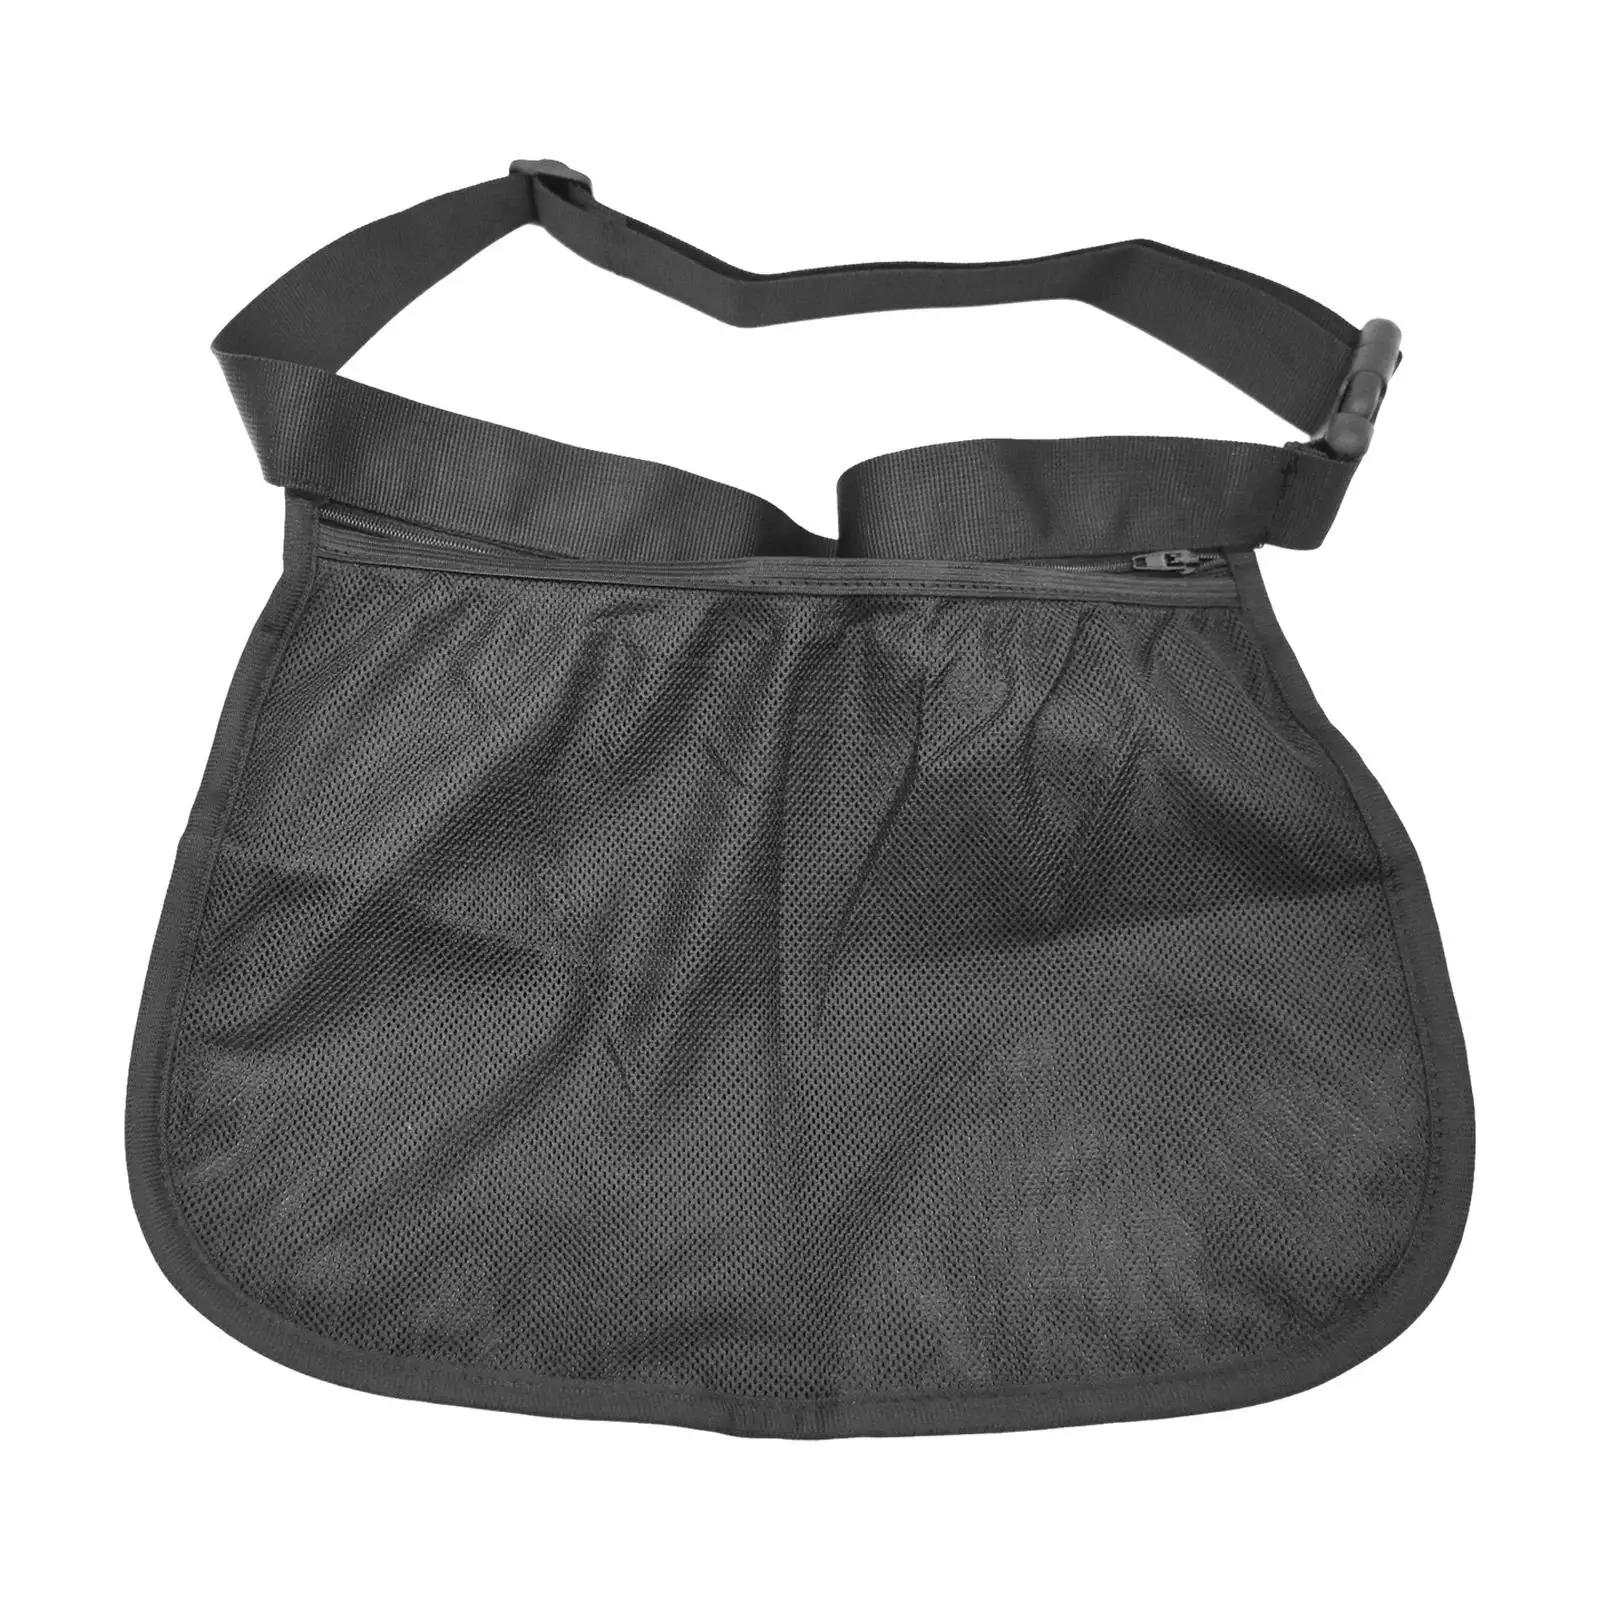 Black Tennis Ball Holder Gadgets Carrying Bag Waist Pocket Carrier Golf Balls Fanny Pack for Fitness Workout Exercise Women Men